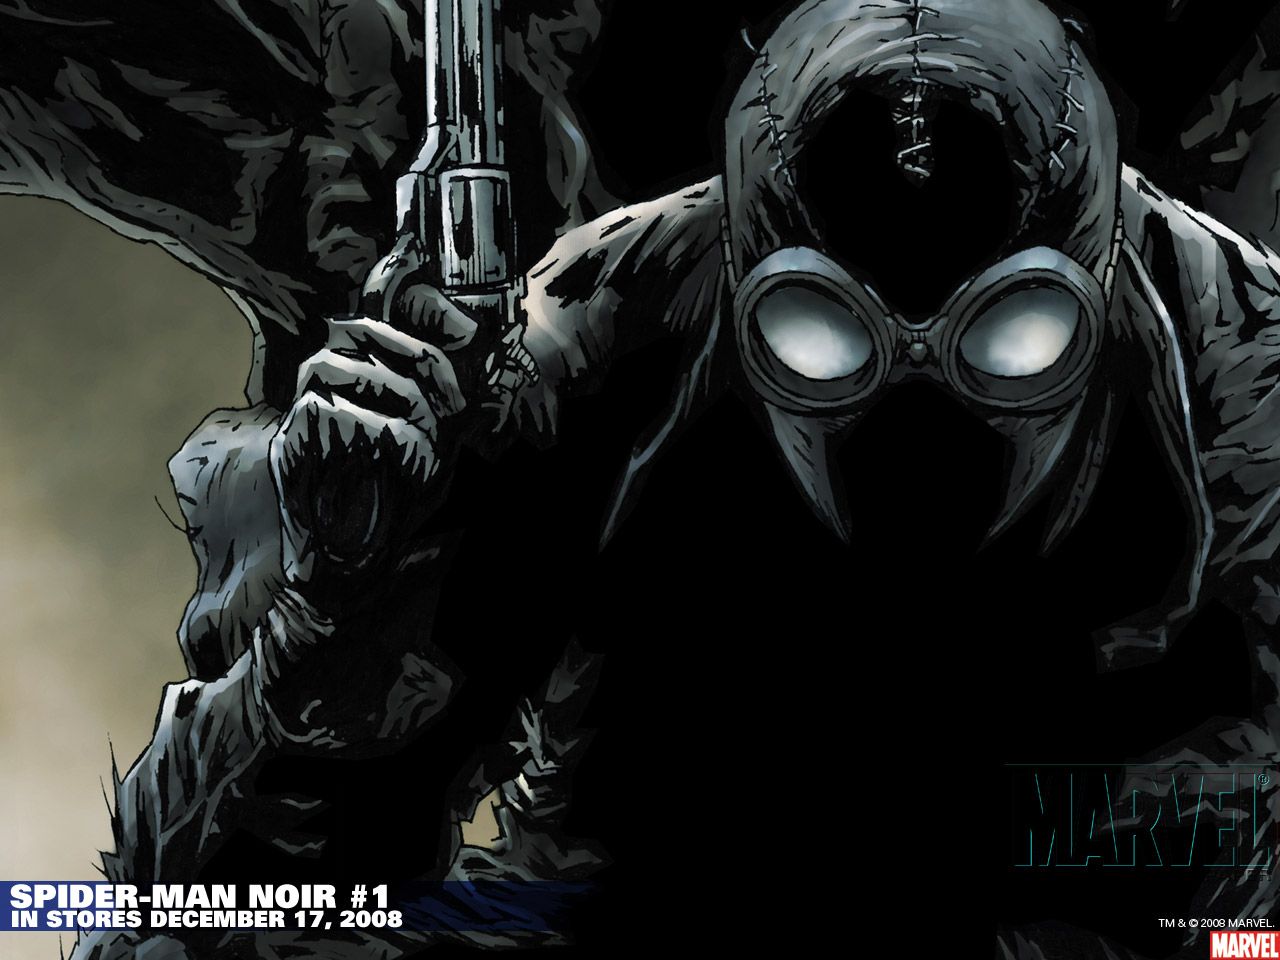 Download Marvel Spiderman Noir Wallpaper 1280x960 | Full HD Wallpapers